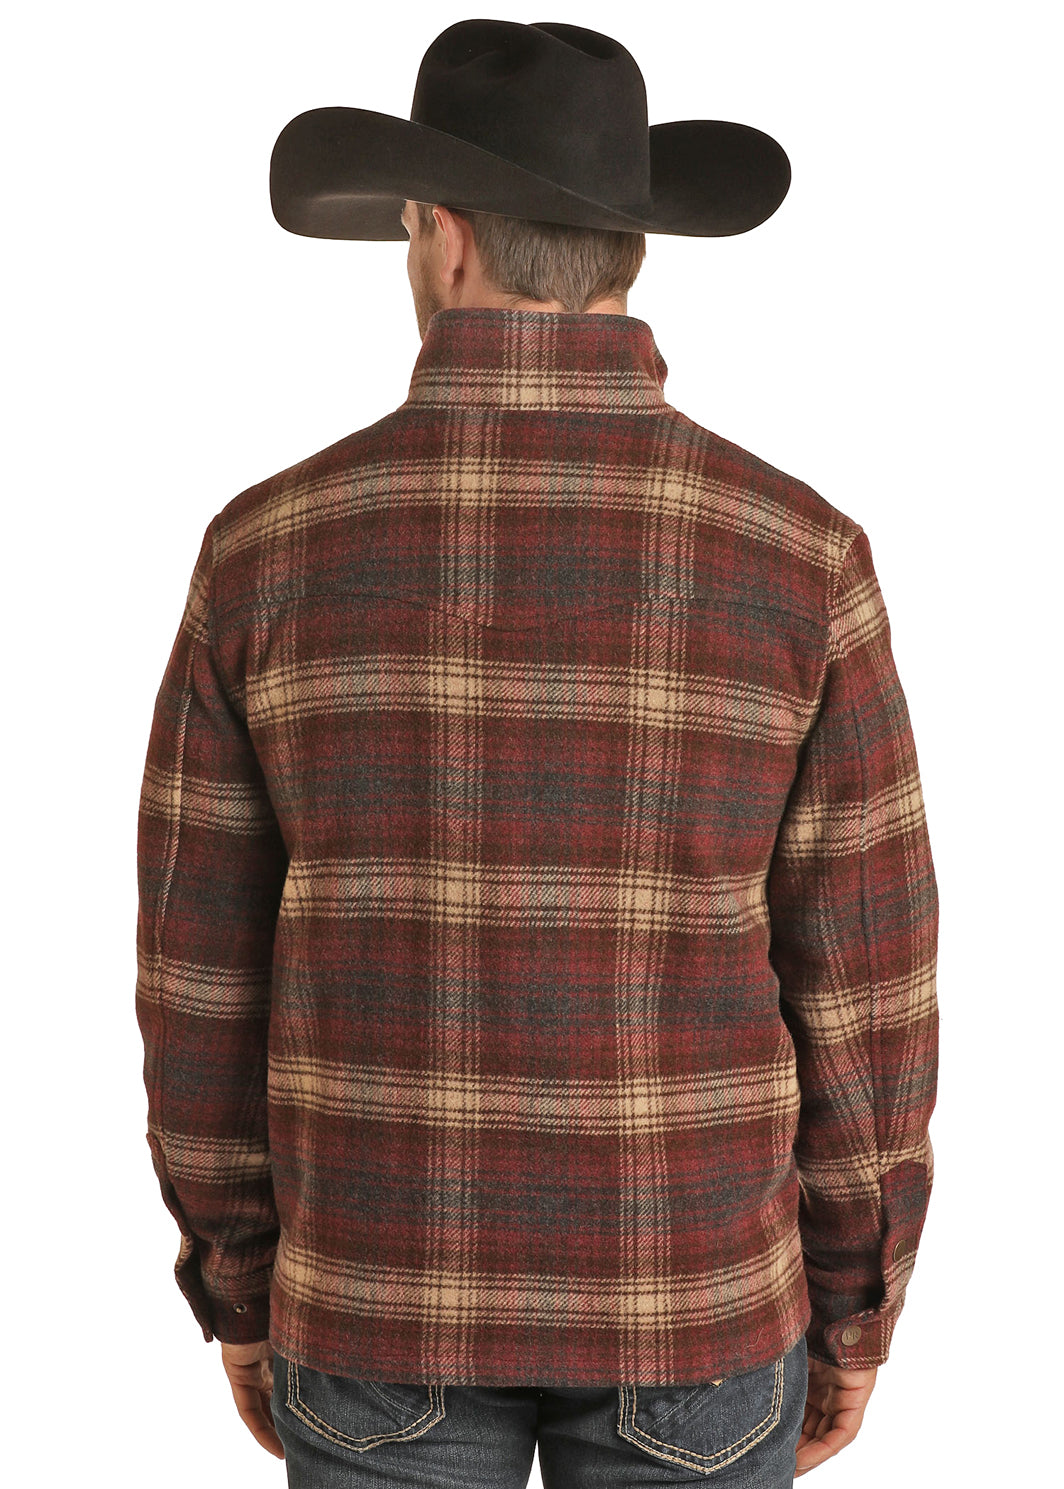 Panhandle Men's Wool Coat Jacket - Red Plaid